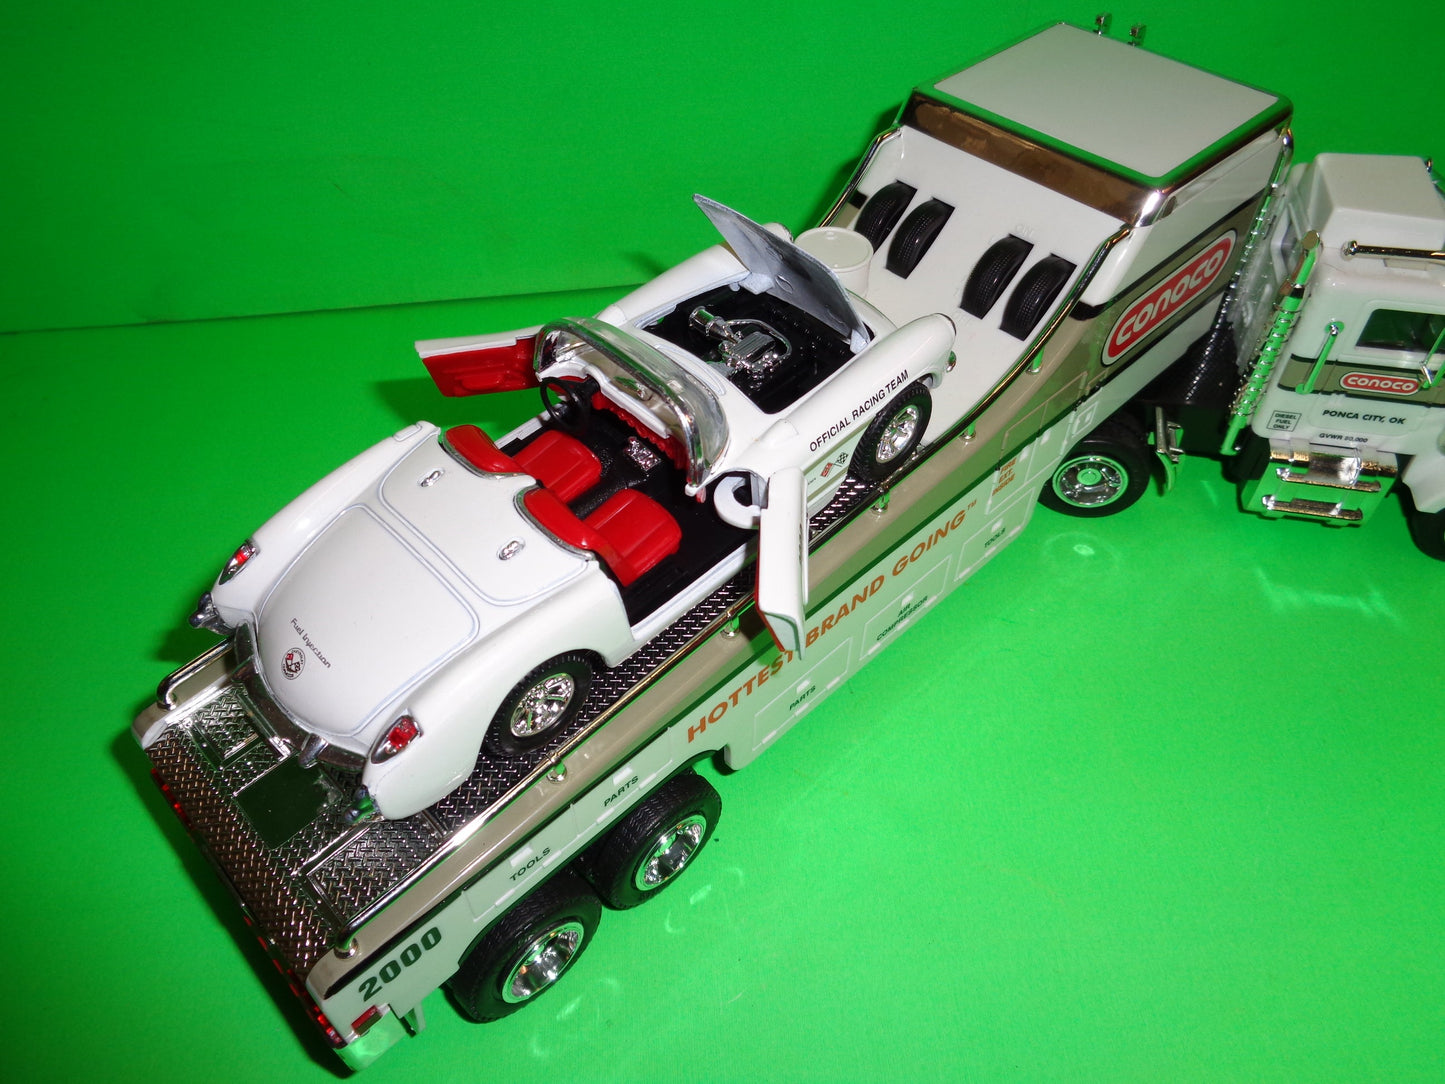 Conoco Car Carrier Truck & Chevrolet Corvette